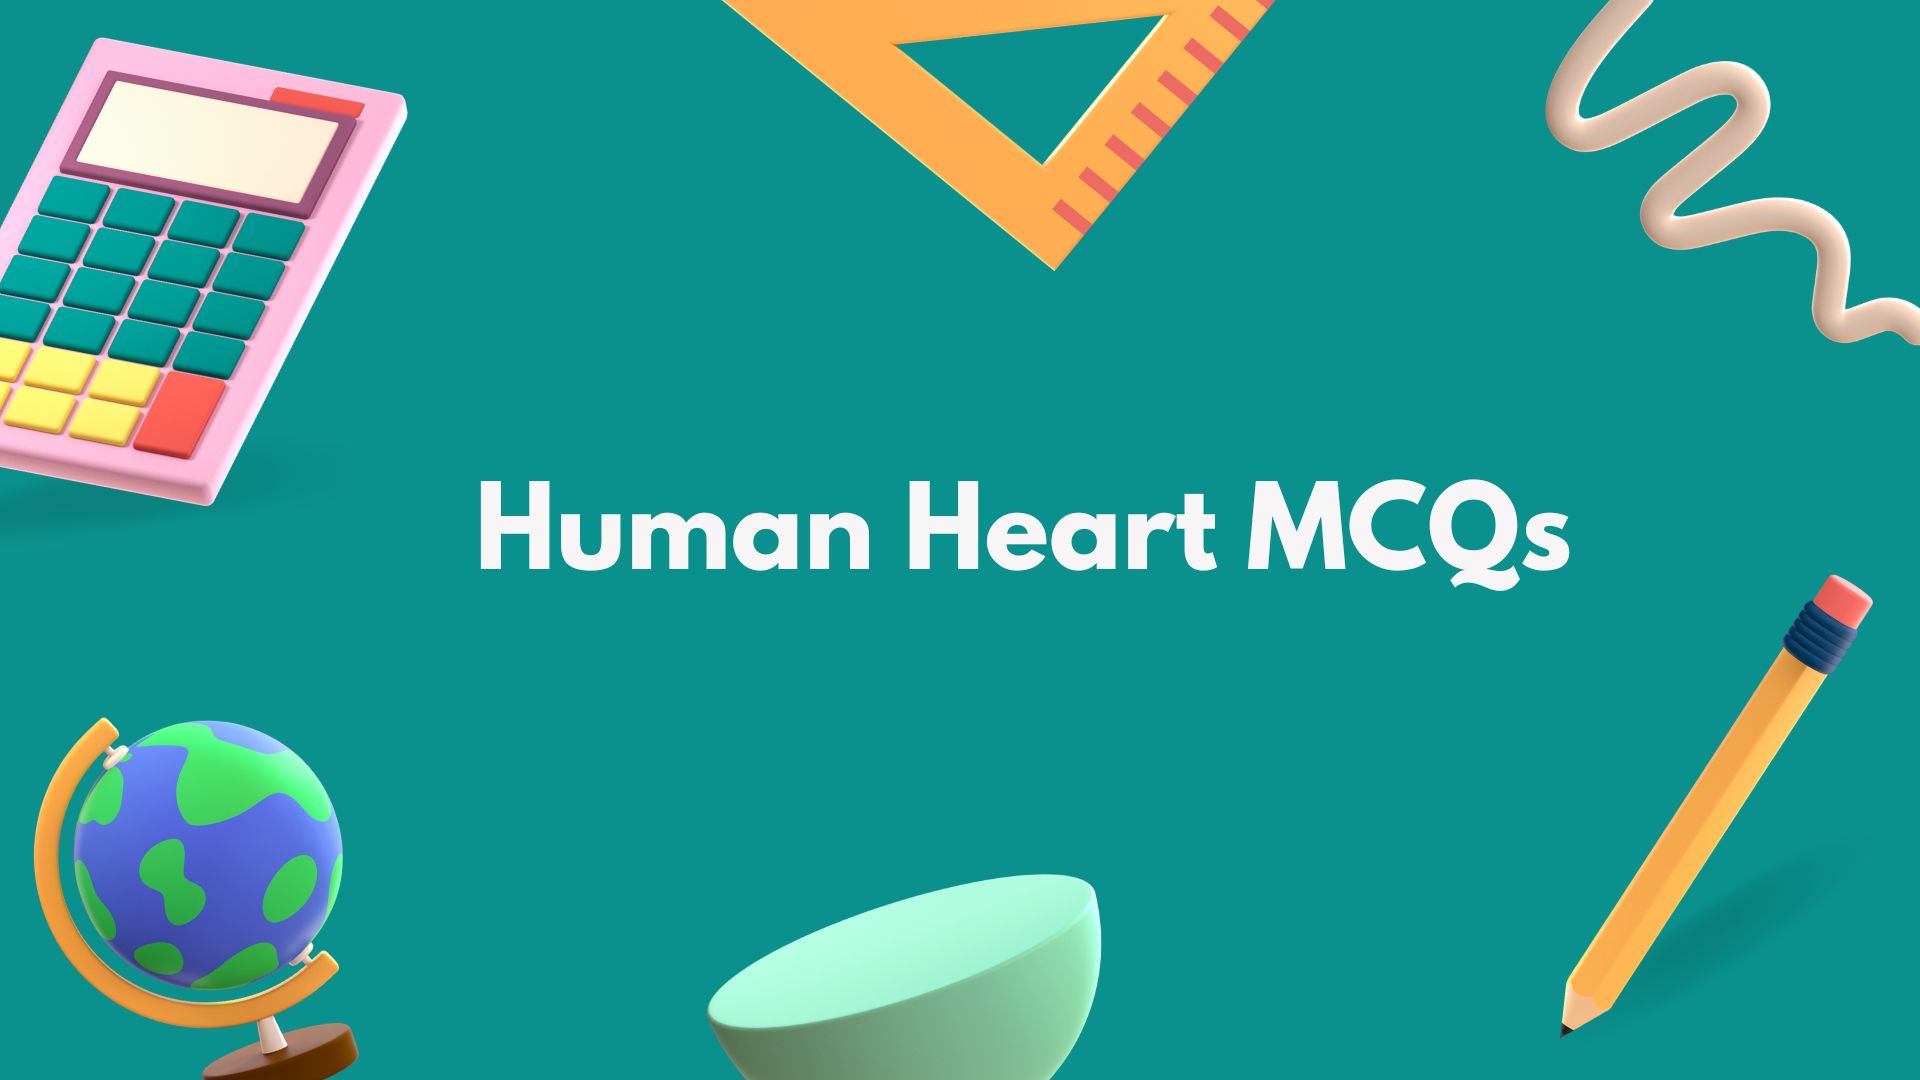 Top Human Heart MCQ (Multiple Choice Questions)